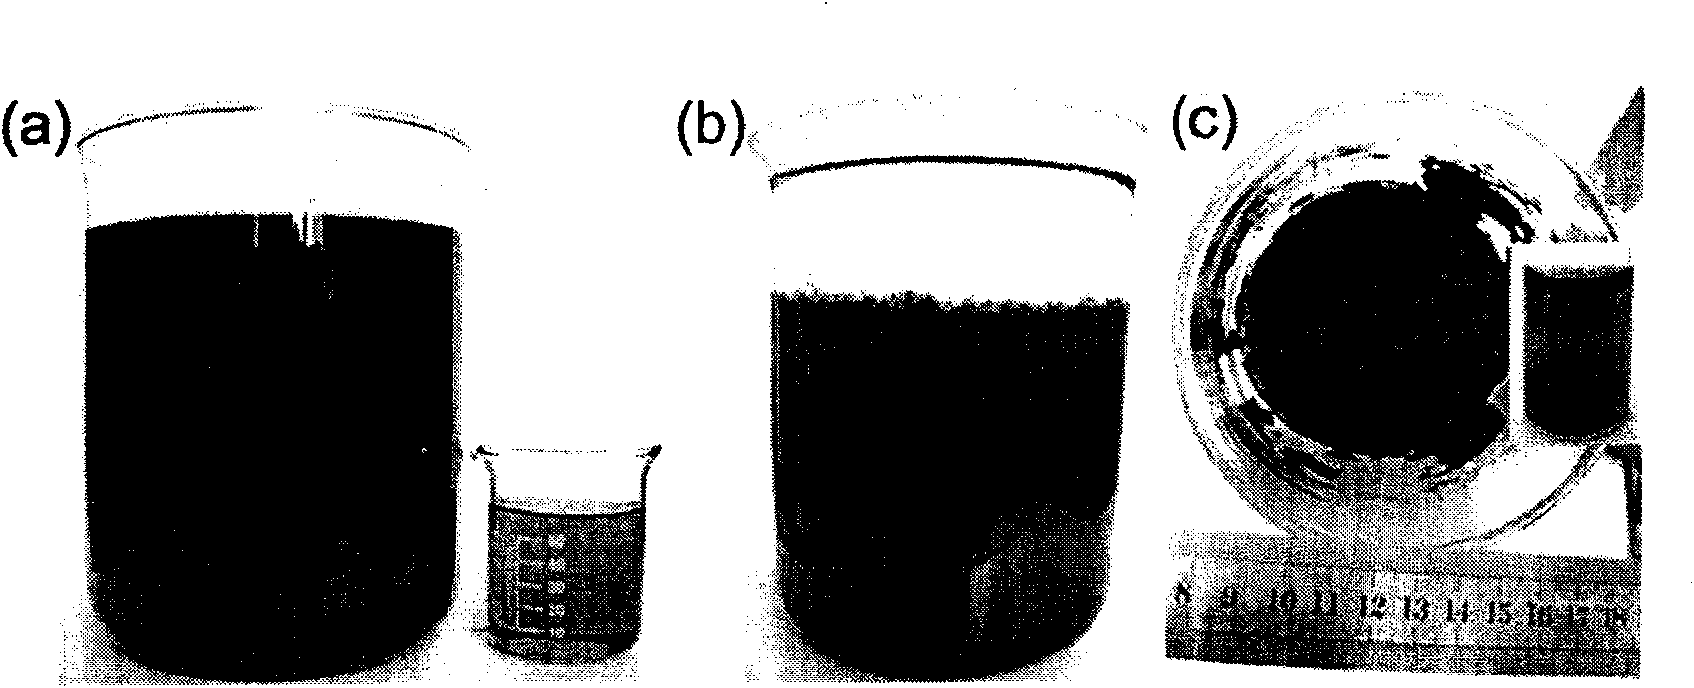 Method for realizing large-scale preparation of monolayer oxidized graphene